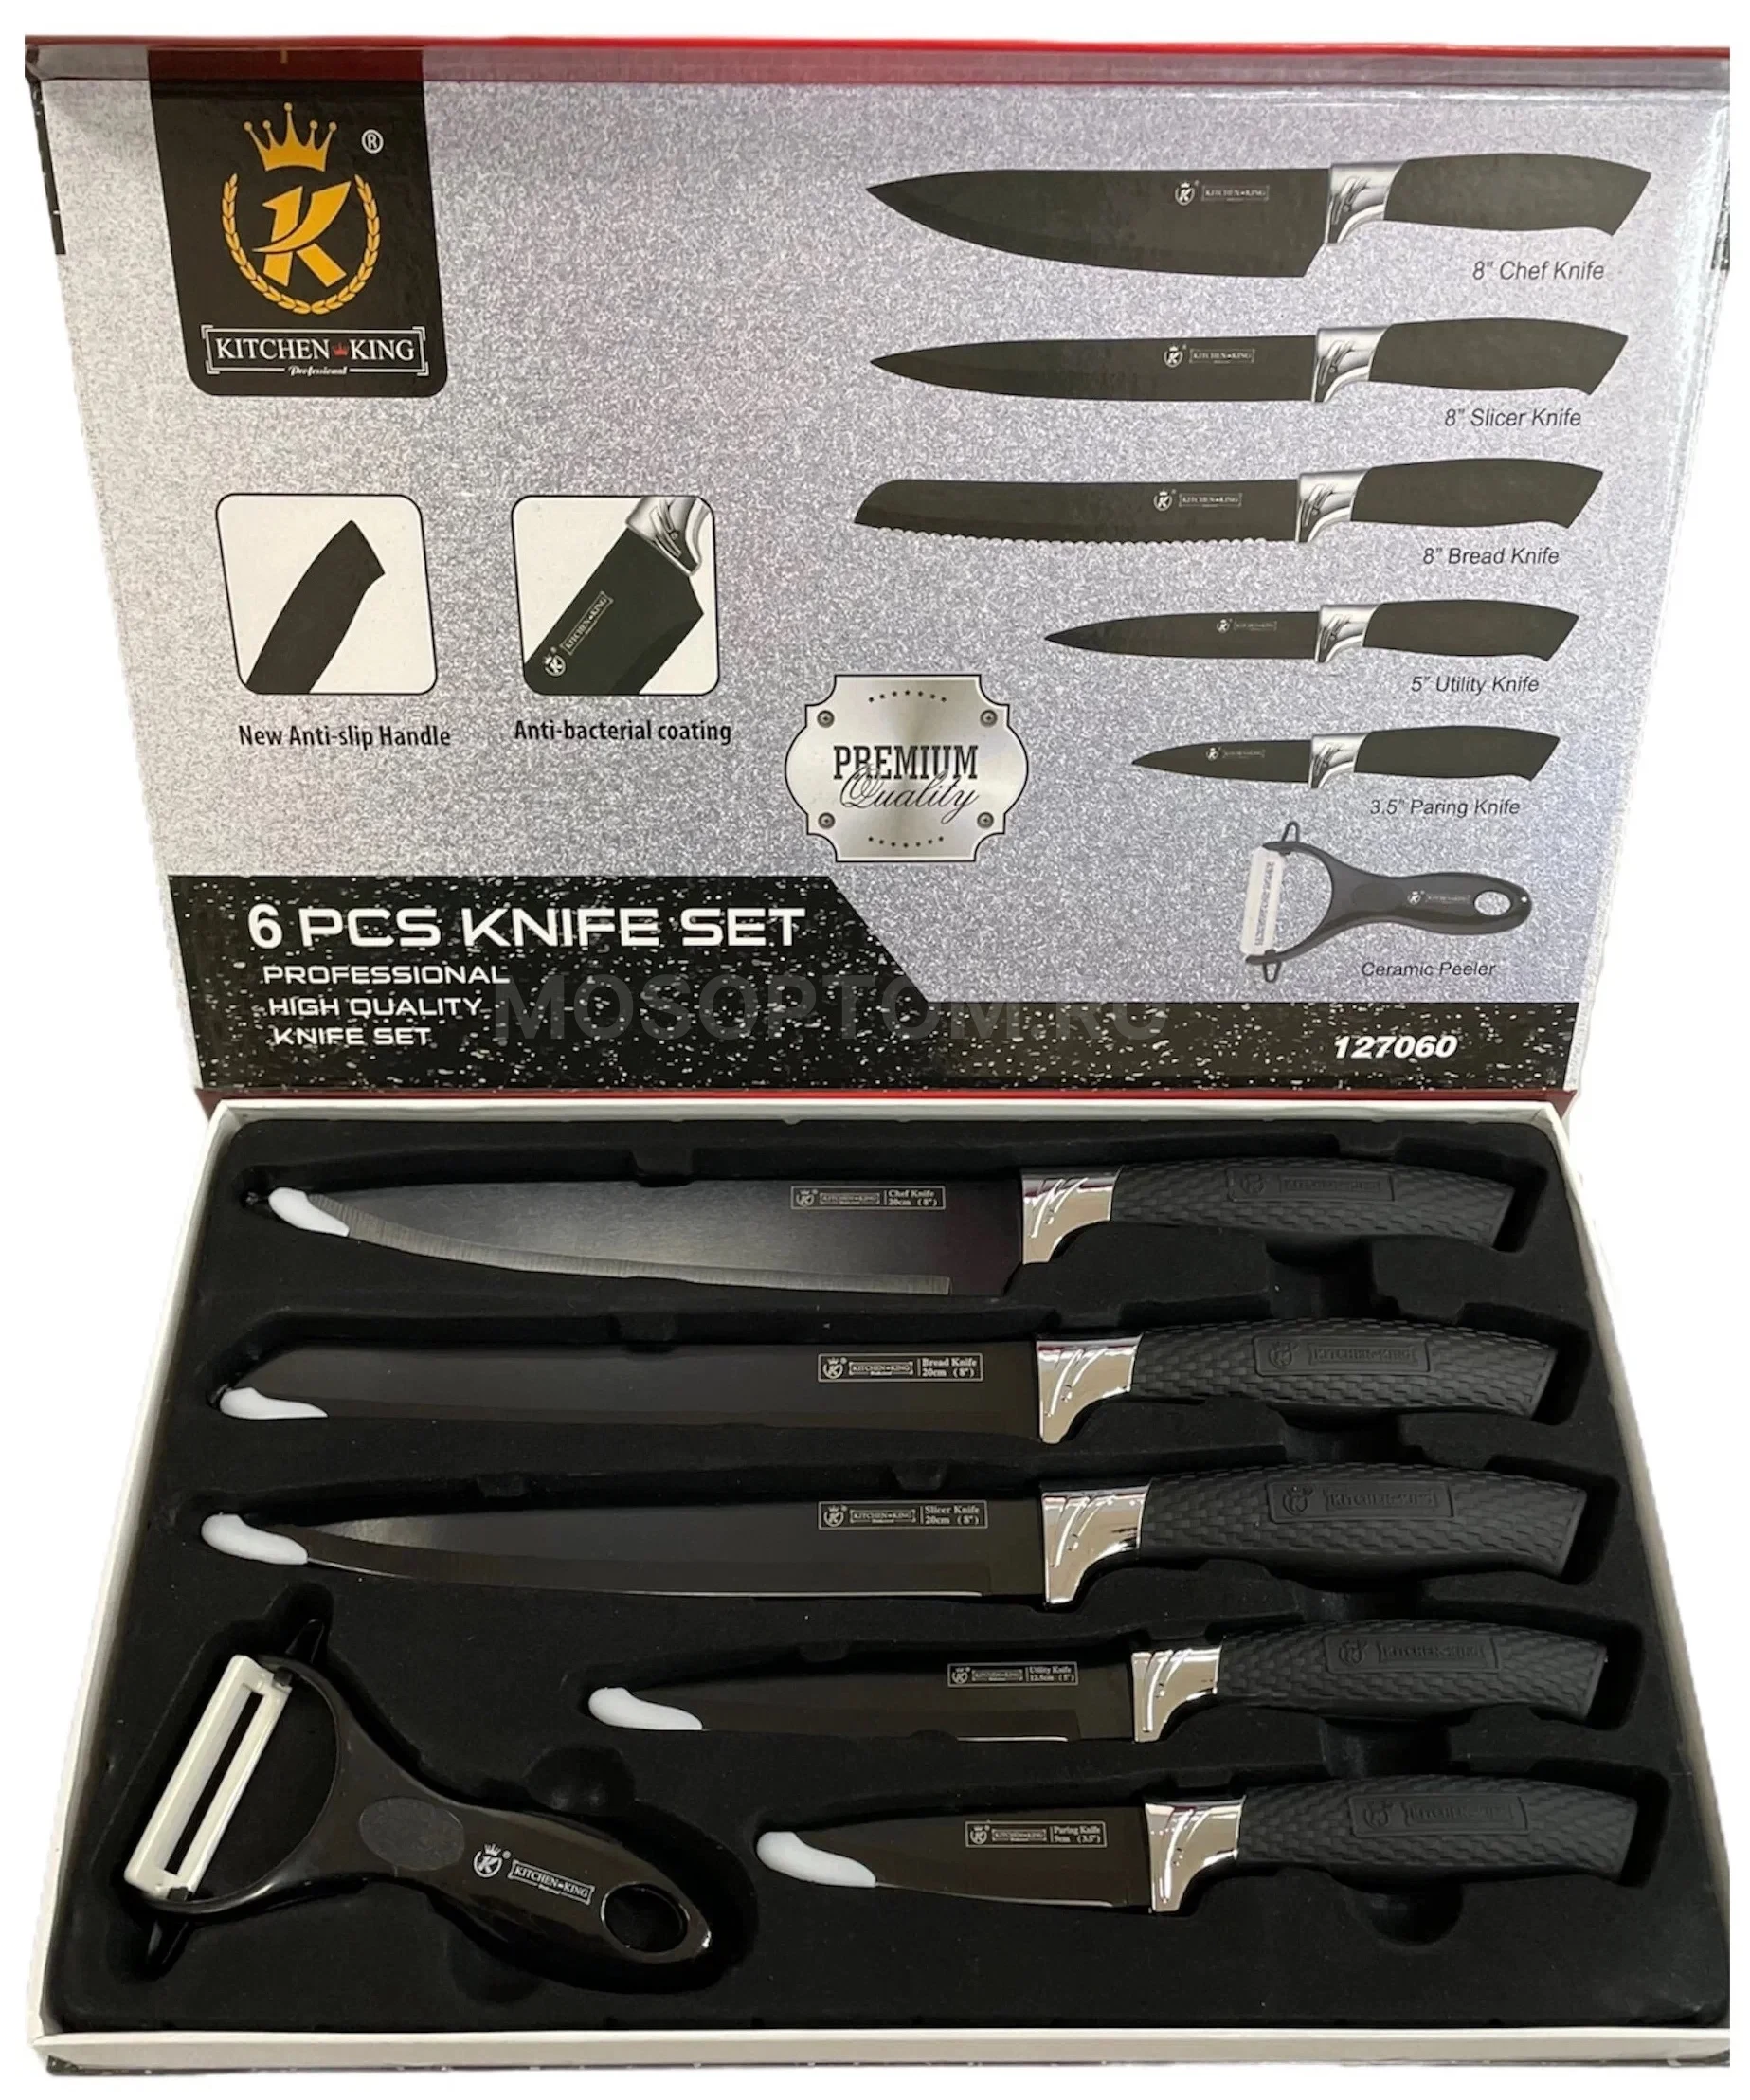 Набор ножей Kitchen King KK-127060 5 ножей с овощечисткой оптом - Фото №3